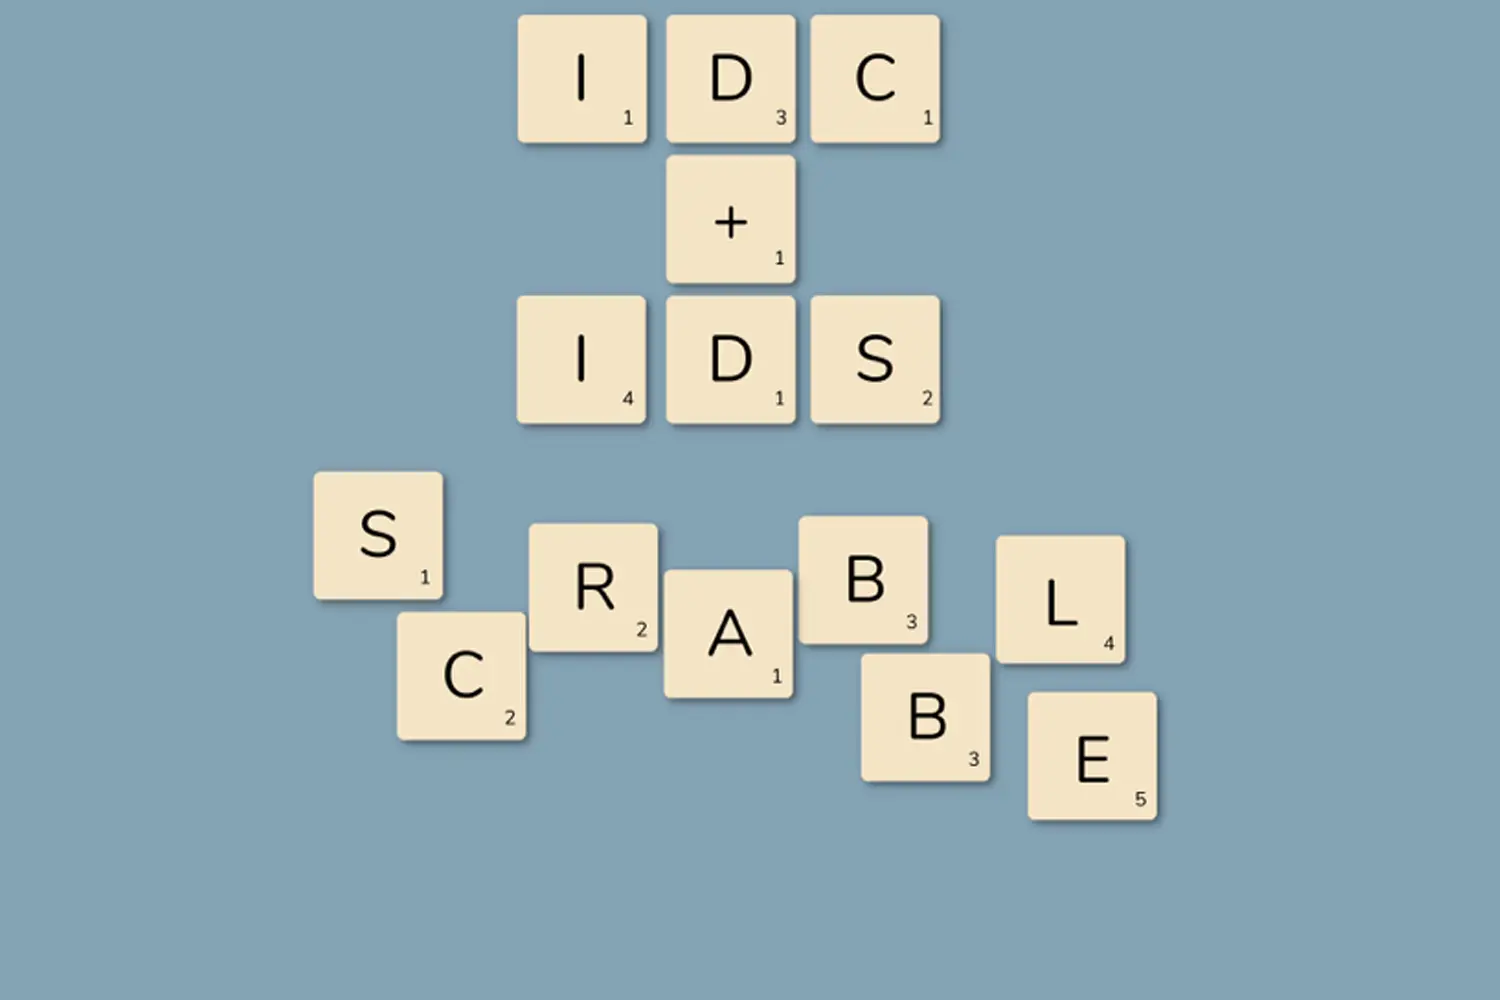 IDC Showroom Scrabble Crawl